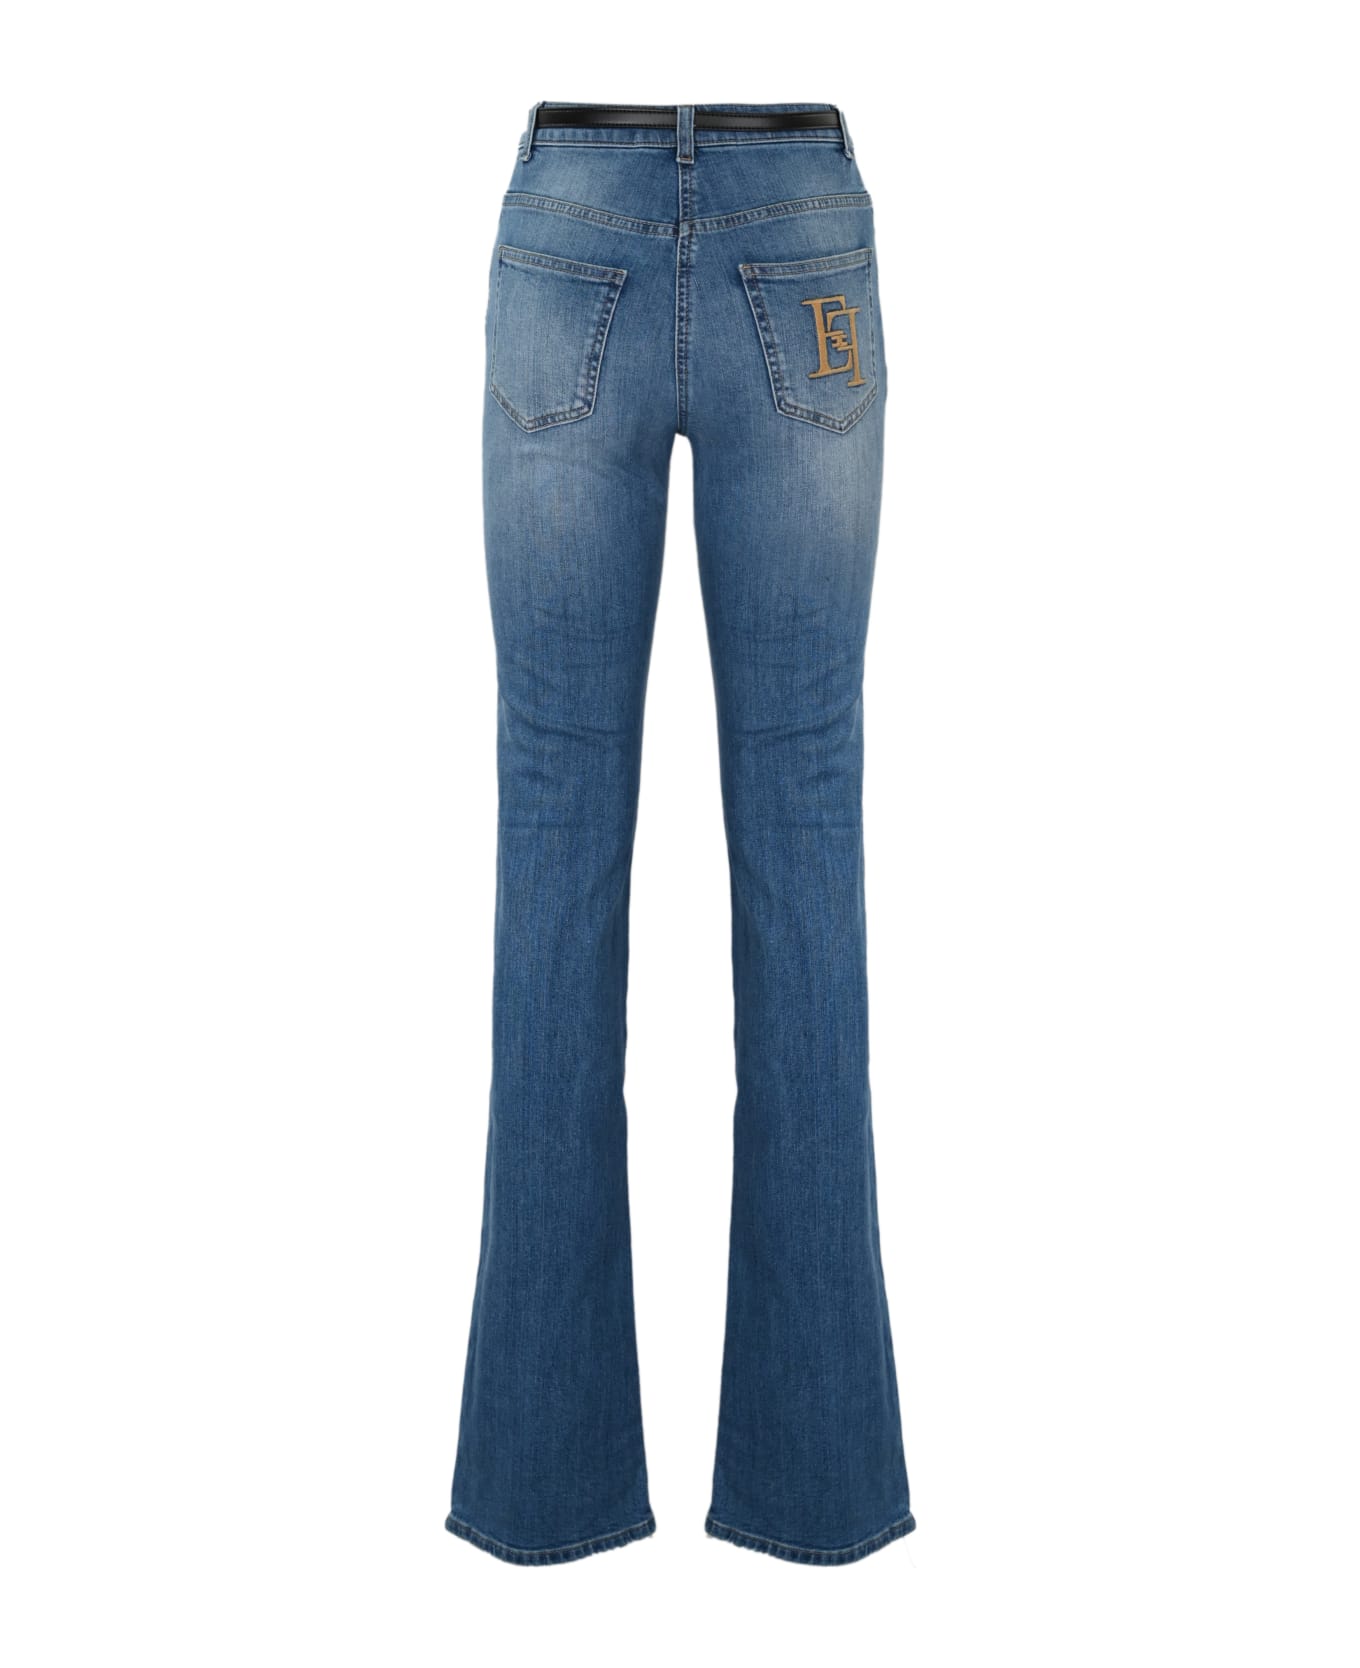 Elisabetta Franchi Flared Jeans With Belt And Clutch Bag - Light blue